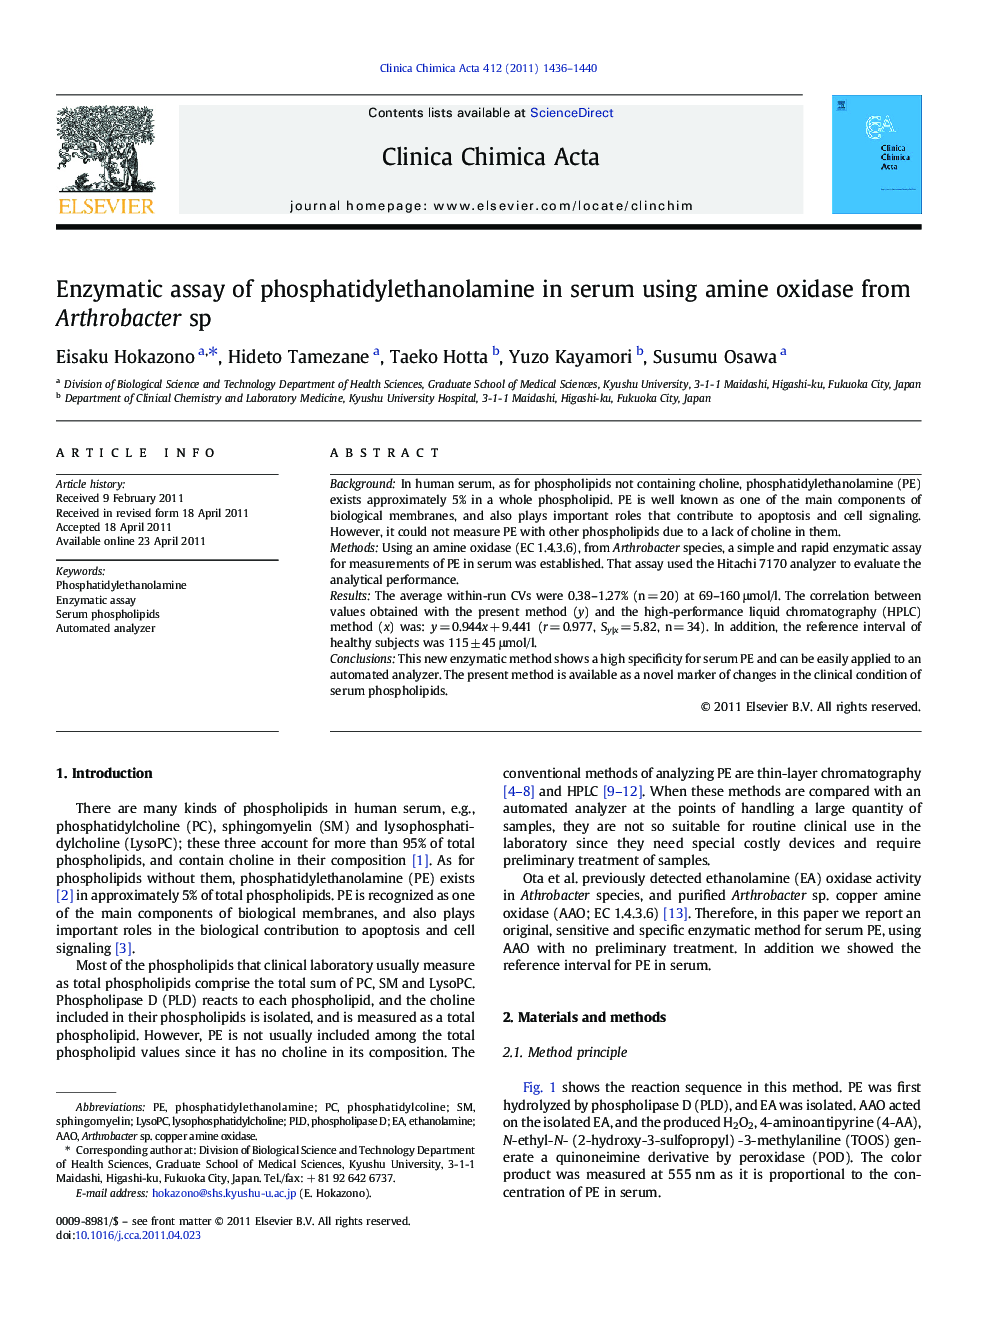 Enzymatic assay of phosphatidylethanolamine in serum using amine oxidase from Arthrobacter sp